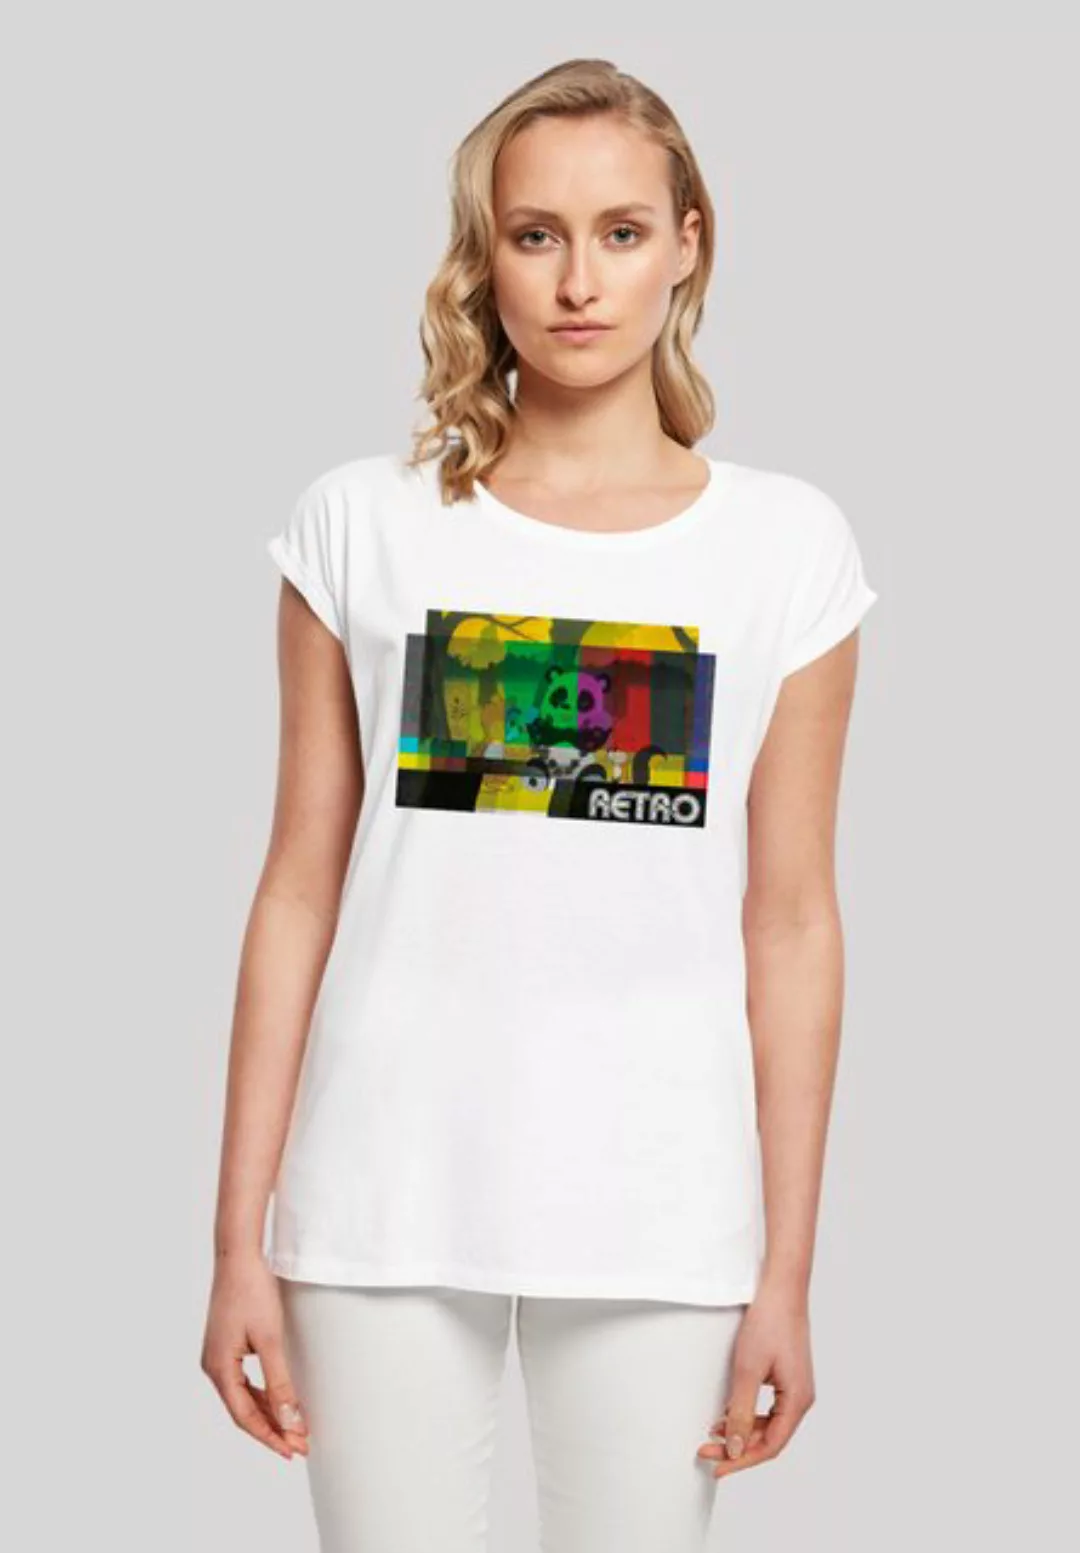 F4NT4STIC T-Shirt Tao Tao Cassette Retro, Heroes of Childhood, TV Serie günstig online kaufen